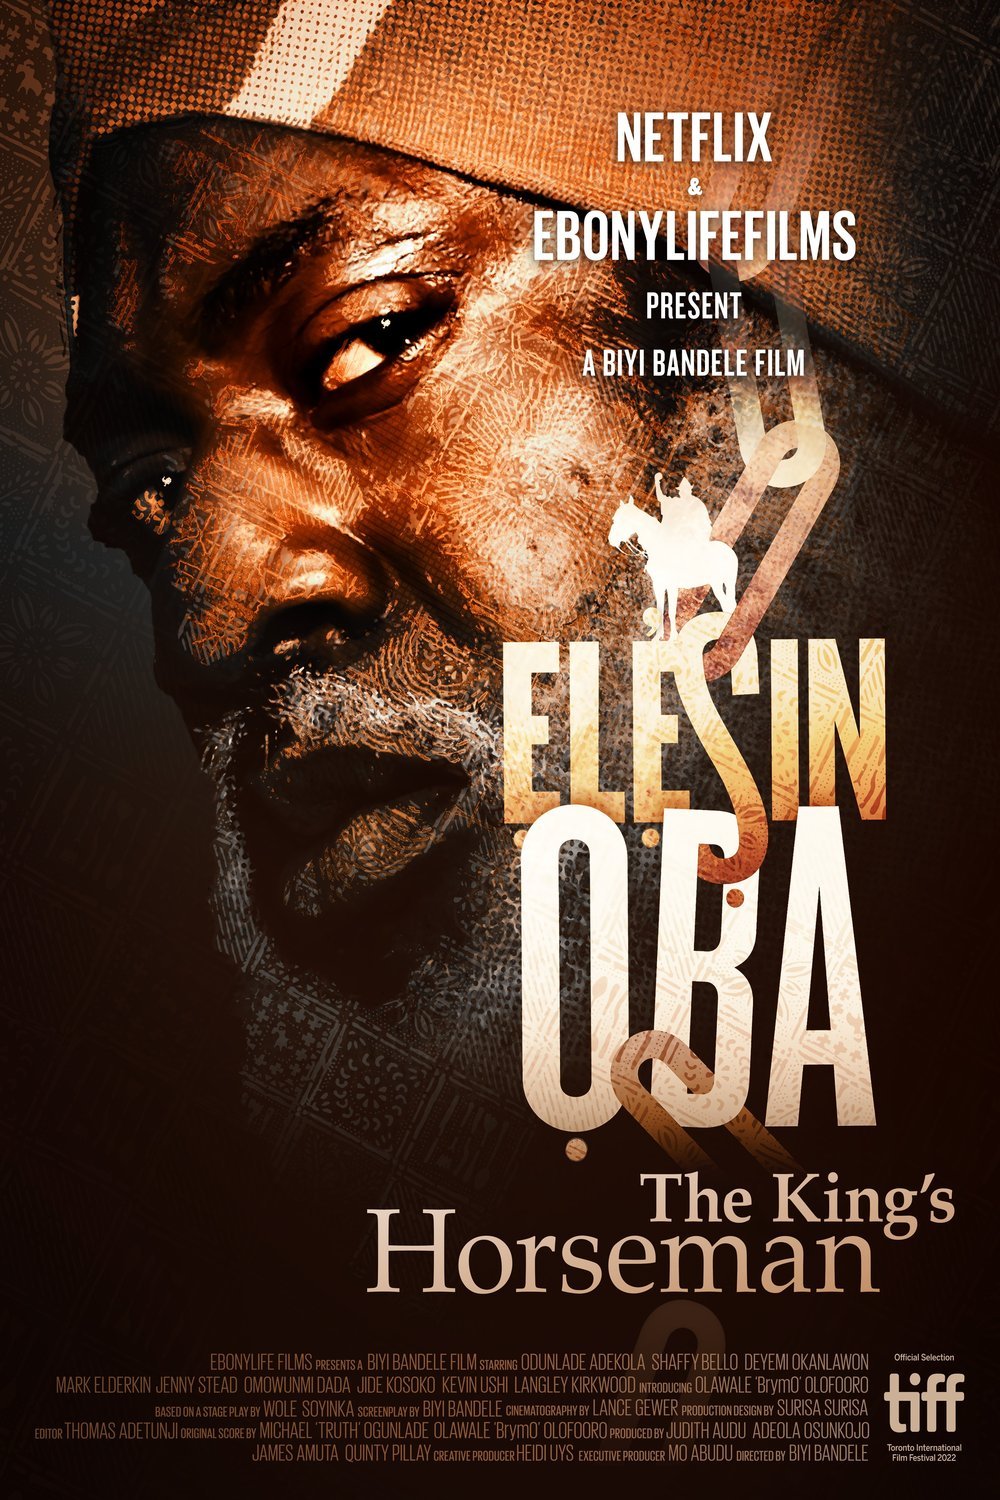 Yoruba poster of the movie Elesin Oba: The King's Horseman